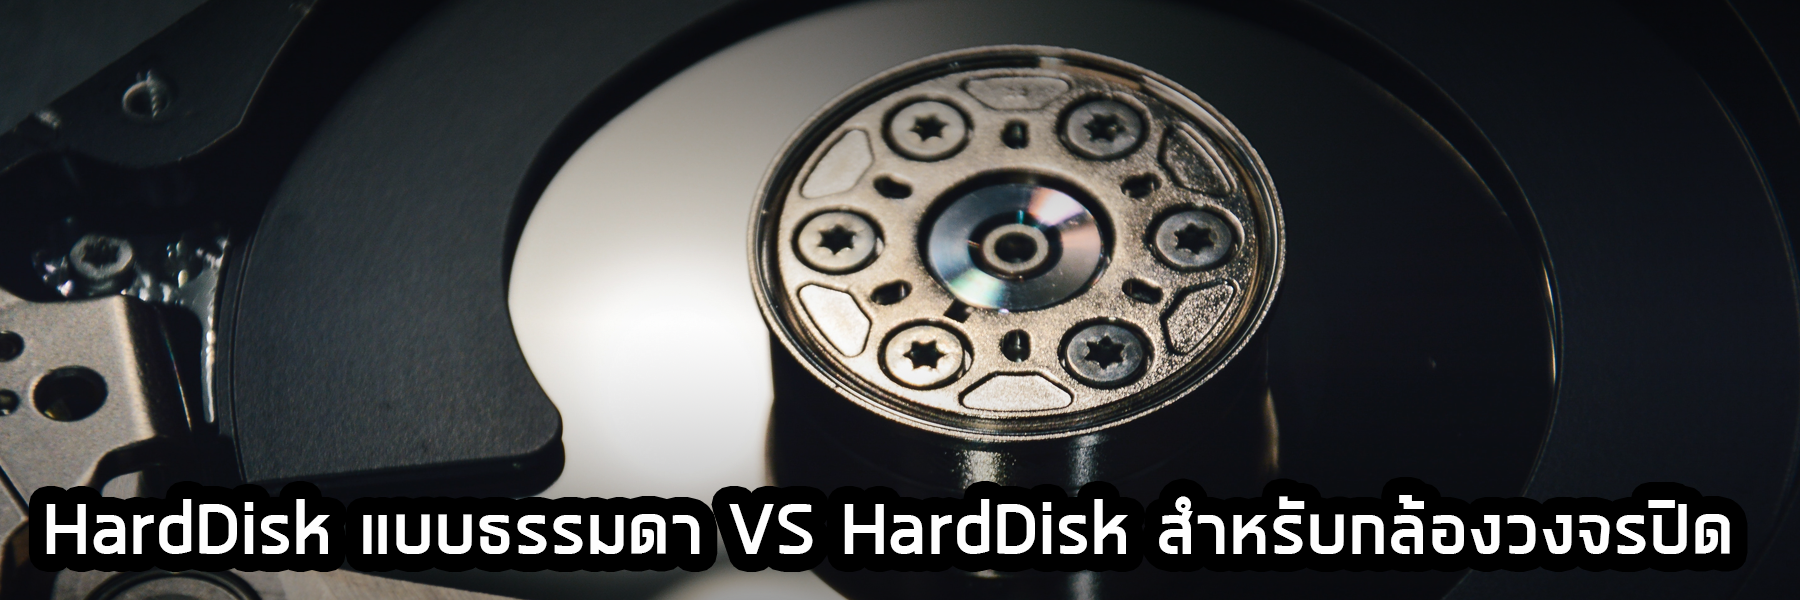 Harddisk แบบธรรมดา vs Harddisk สำหรับกล้องวงจรปิด